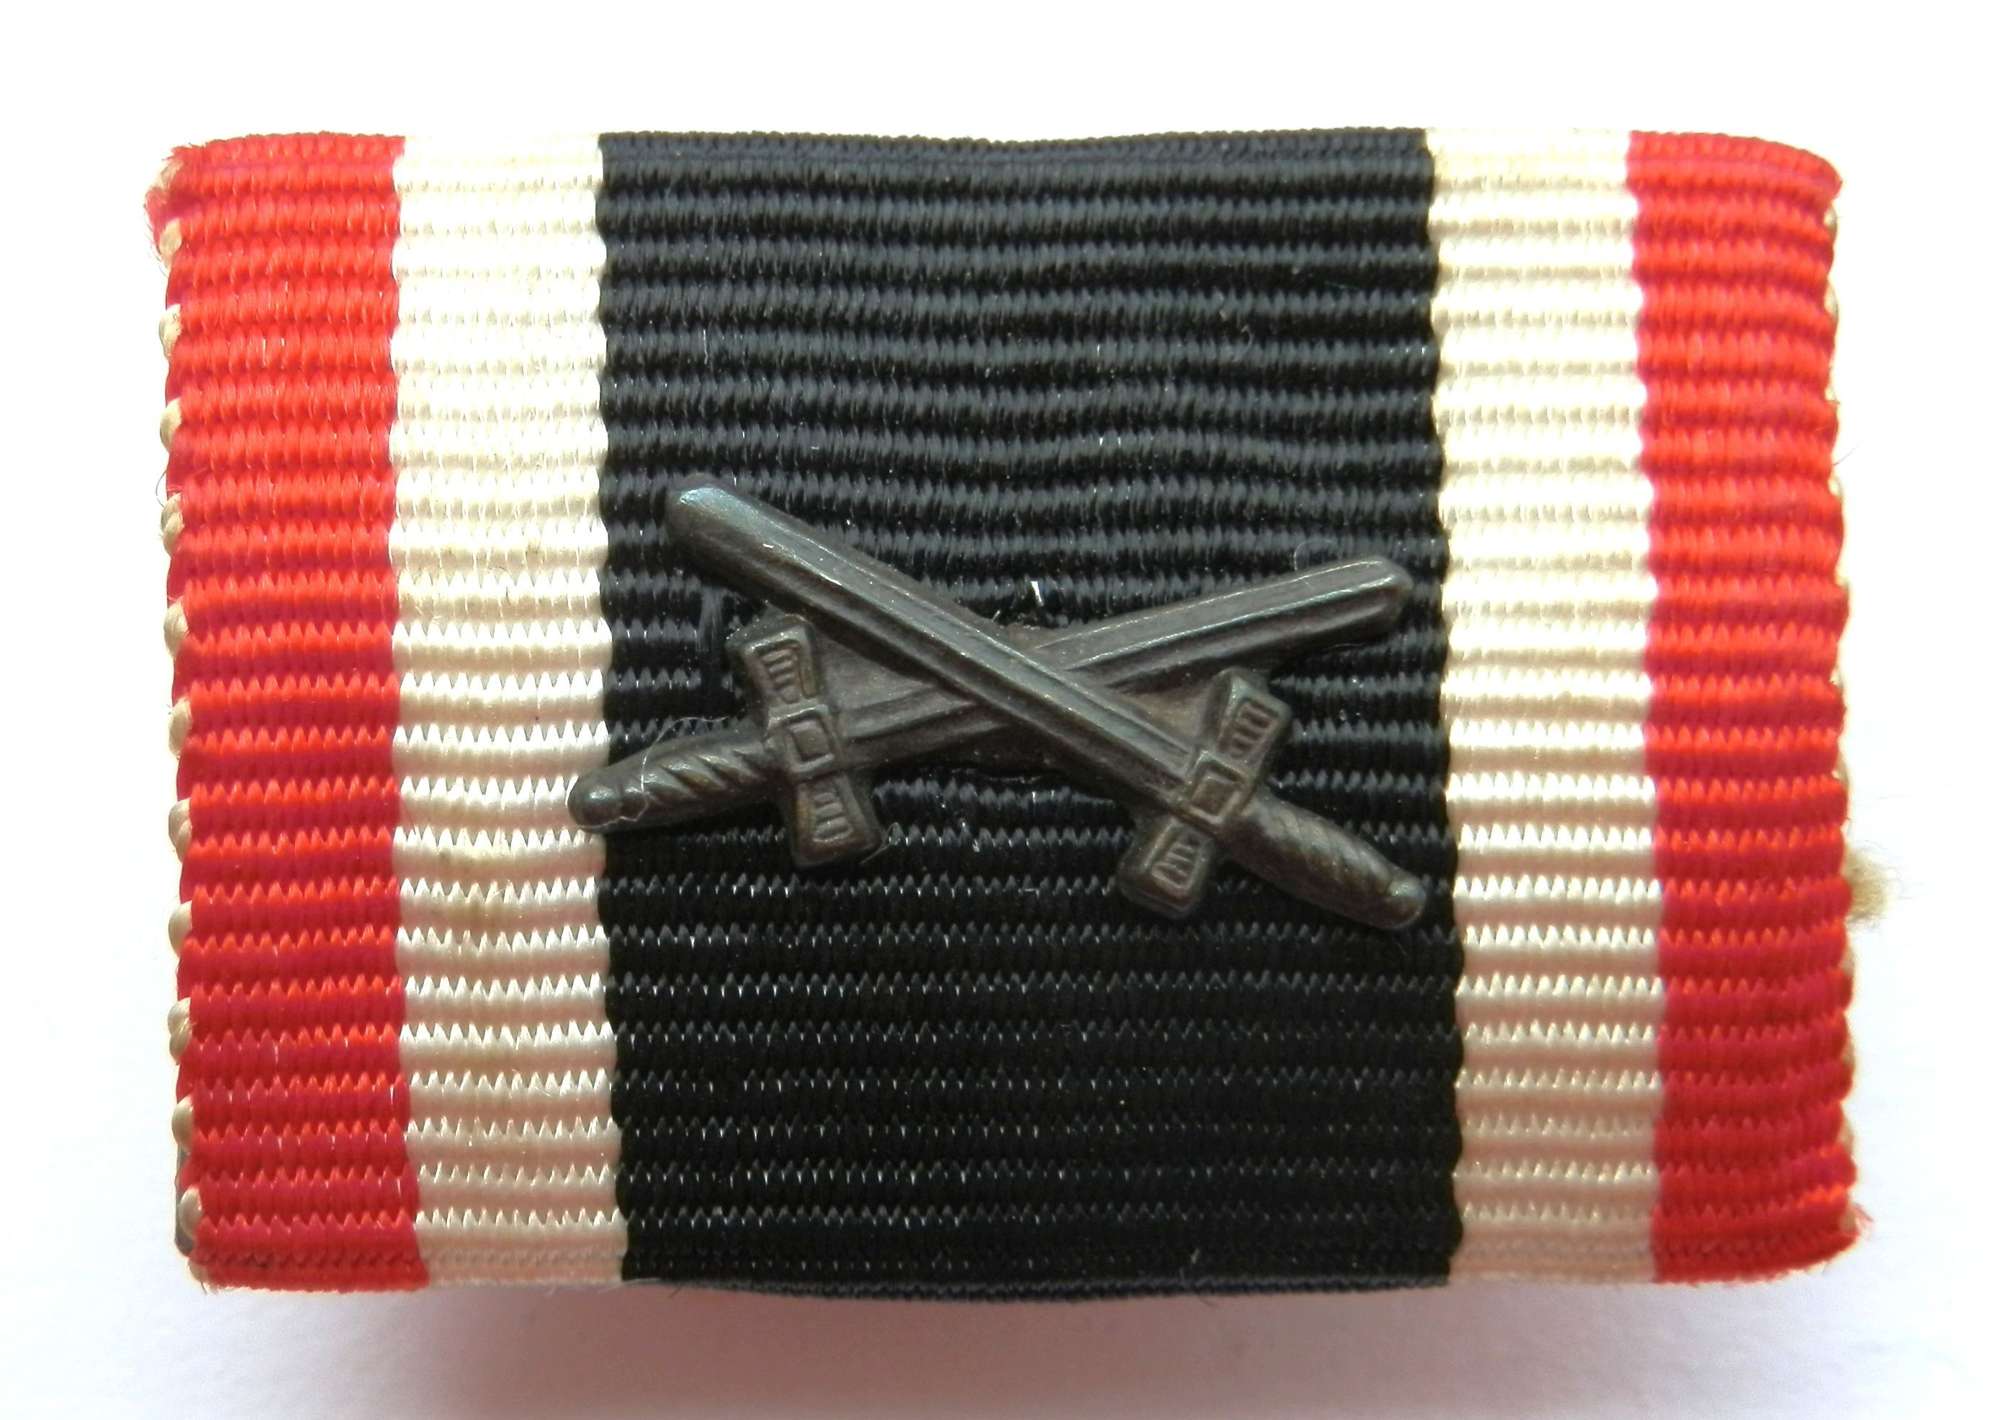 Merrit Cross, 2nd Class with Swords  Medal Ribbon Bar.